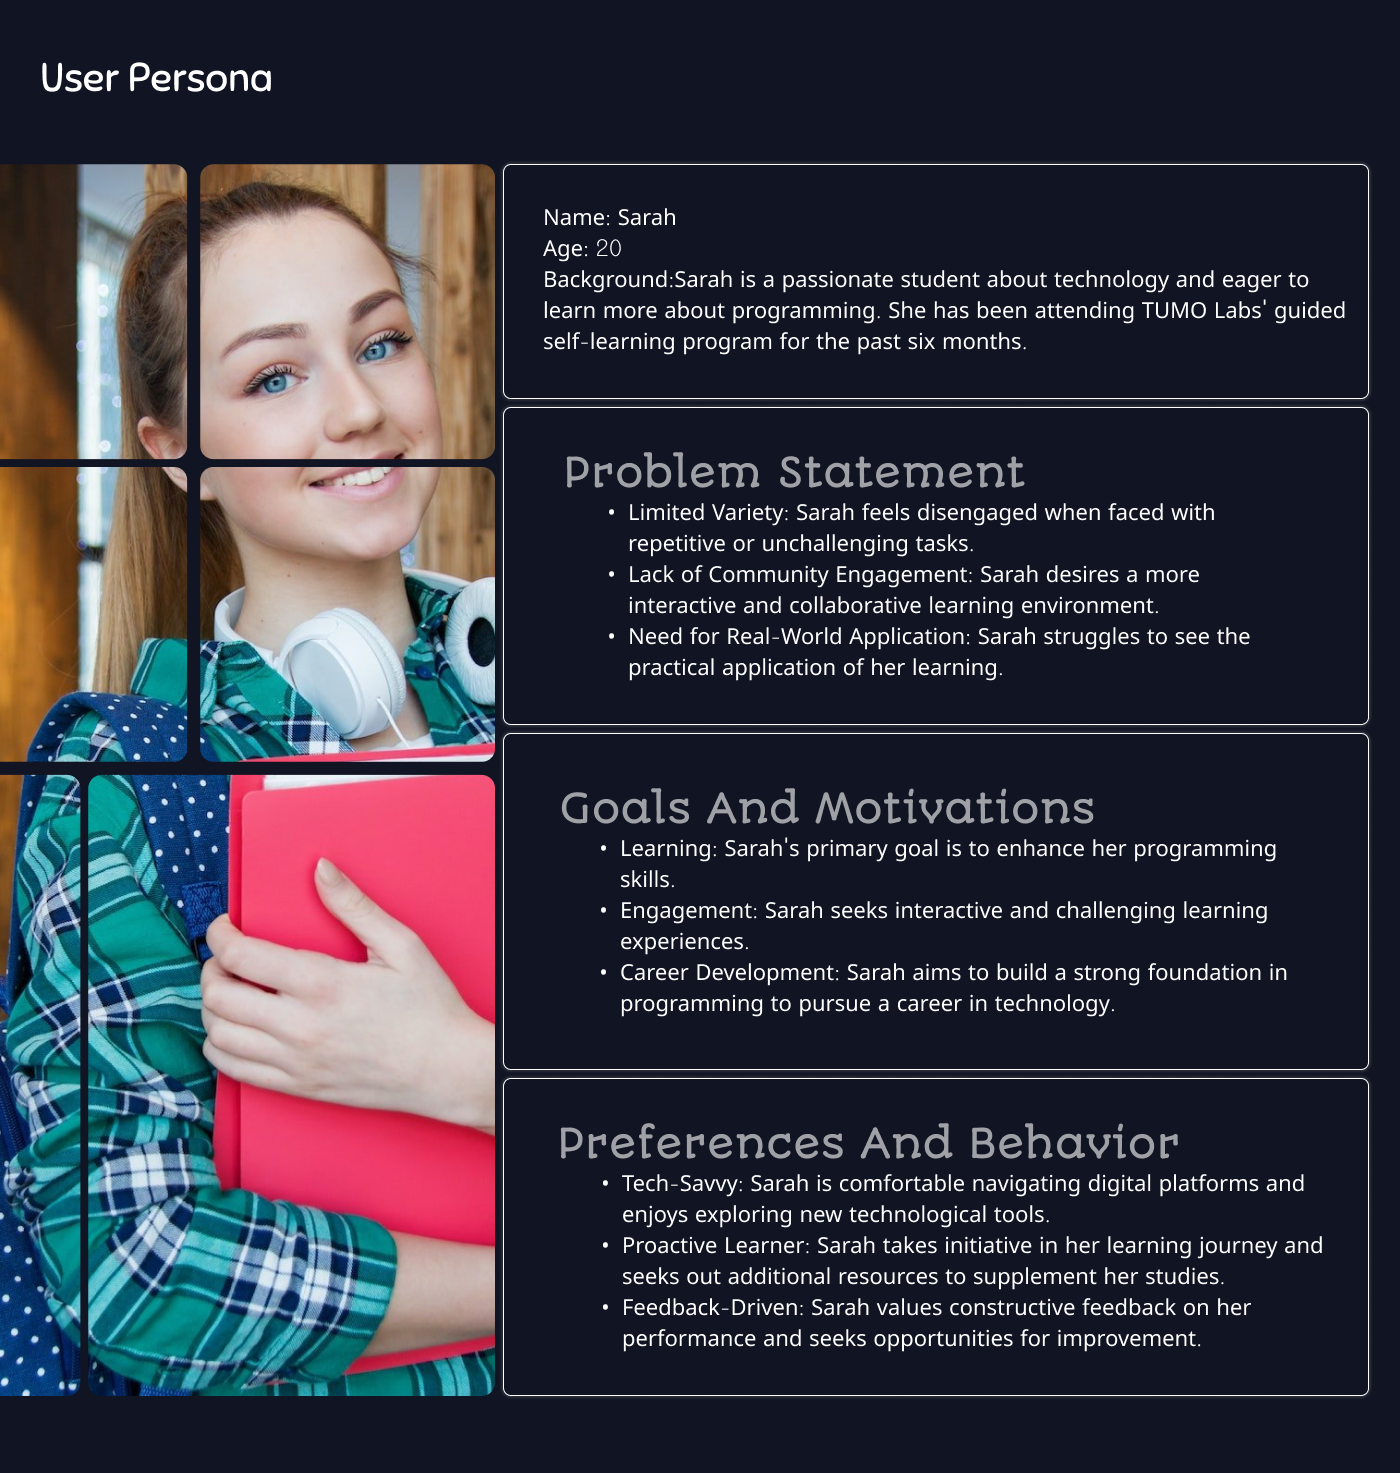 UI/UX edtech dashboard admin SAAS app design user interface user experience app CRM